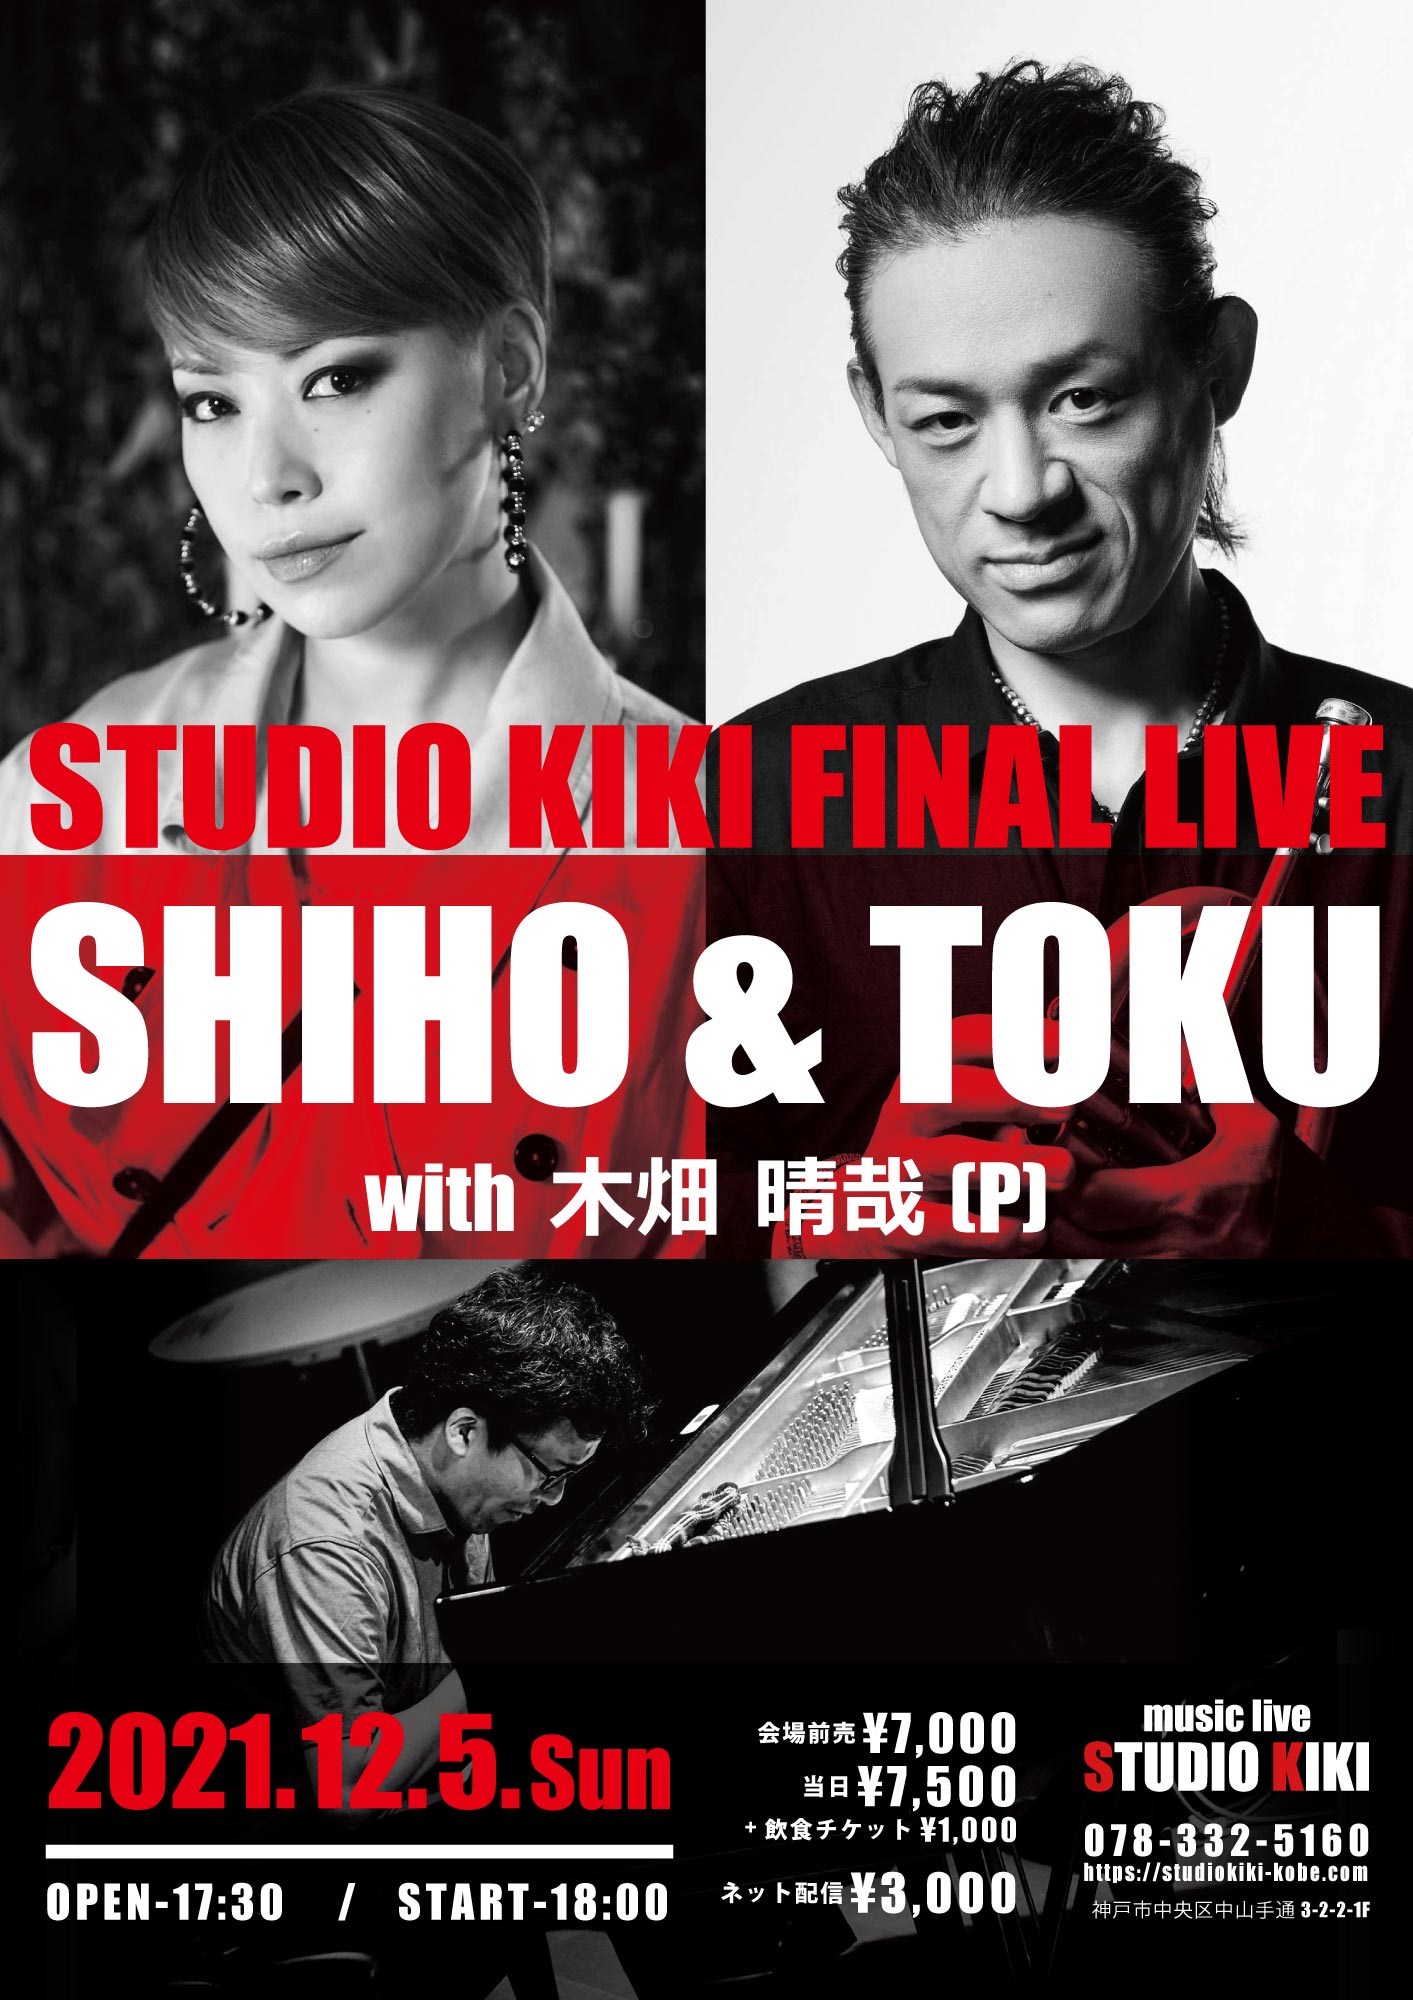 STUDIO KIKI FINAL LIVE - SHIHO & TOKU with 木畑 晴哉 (ONLINE)